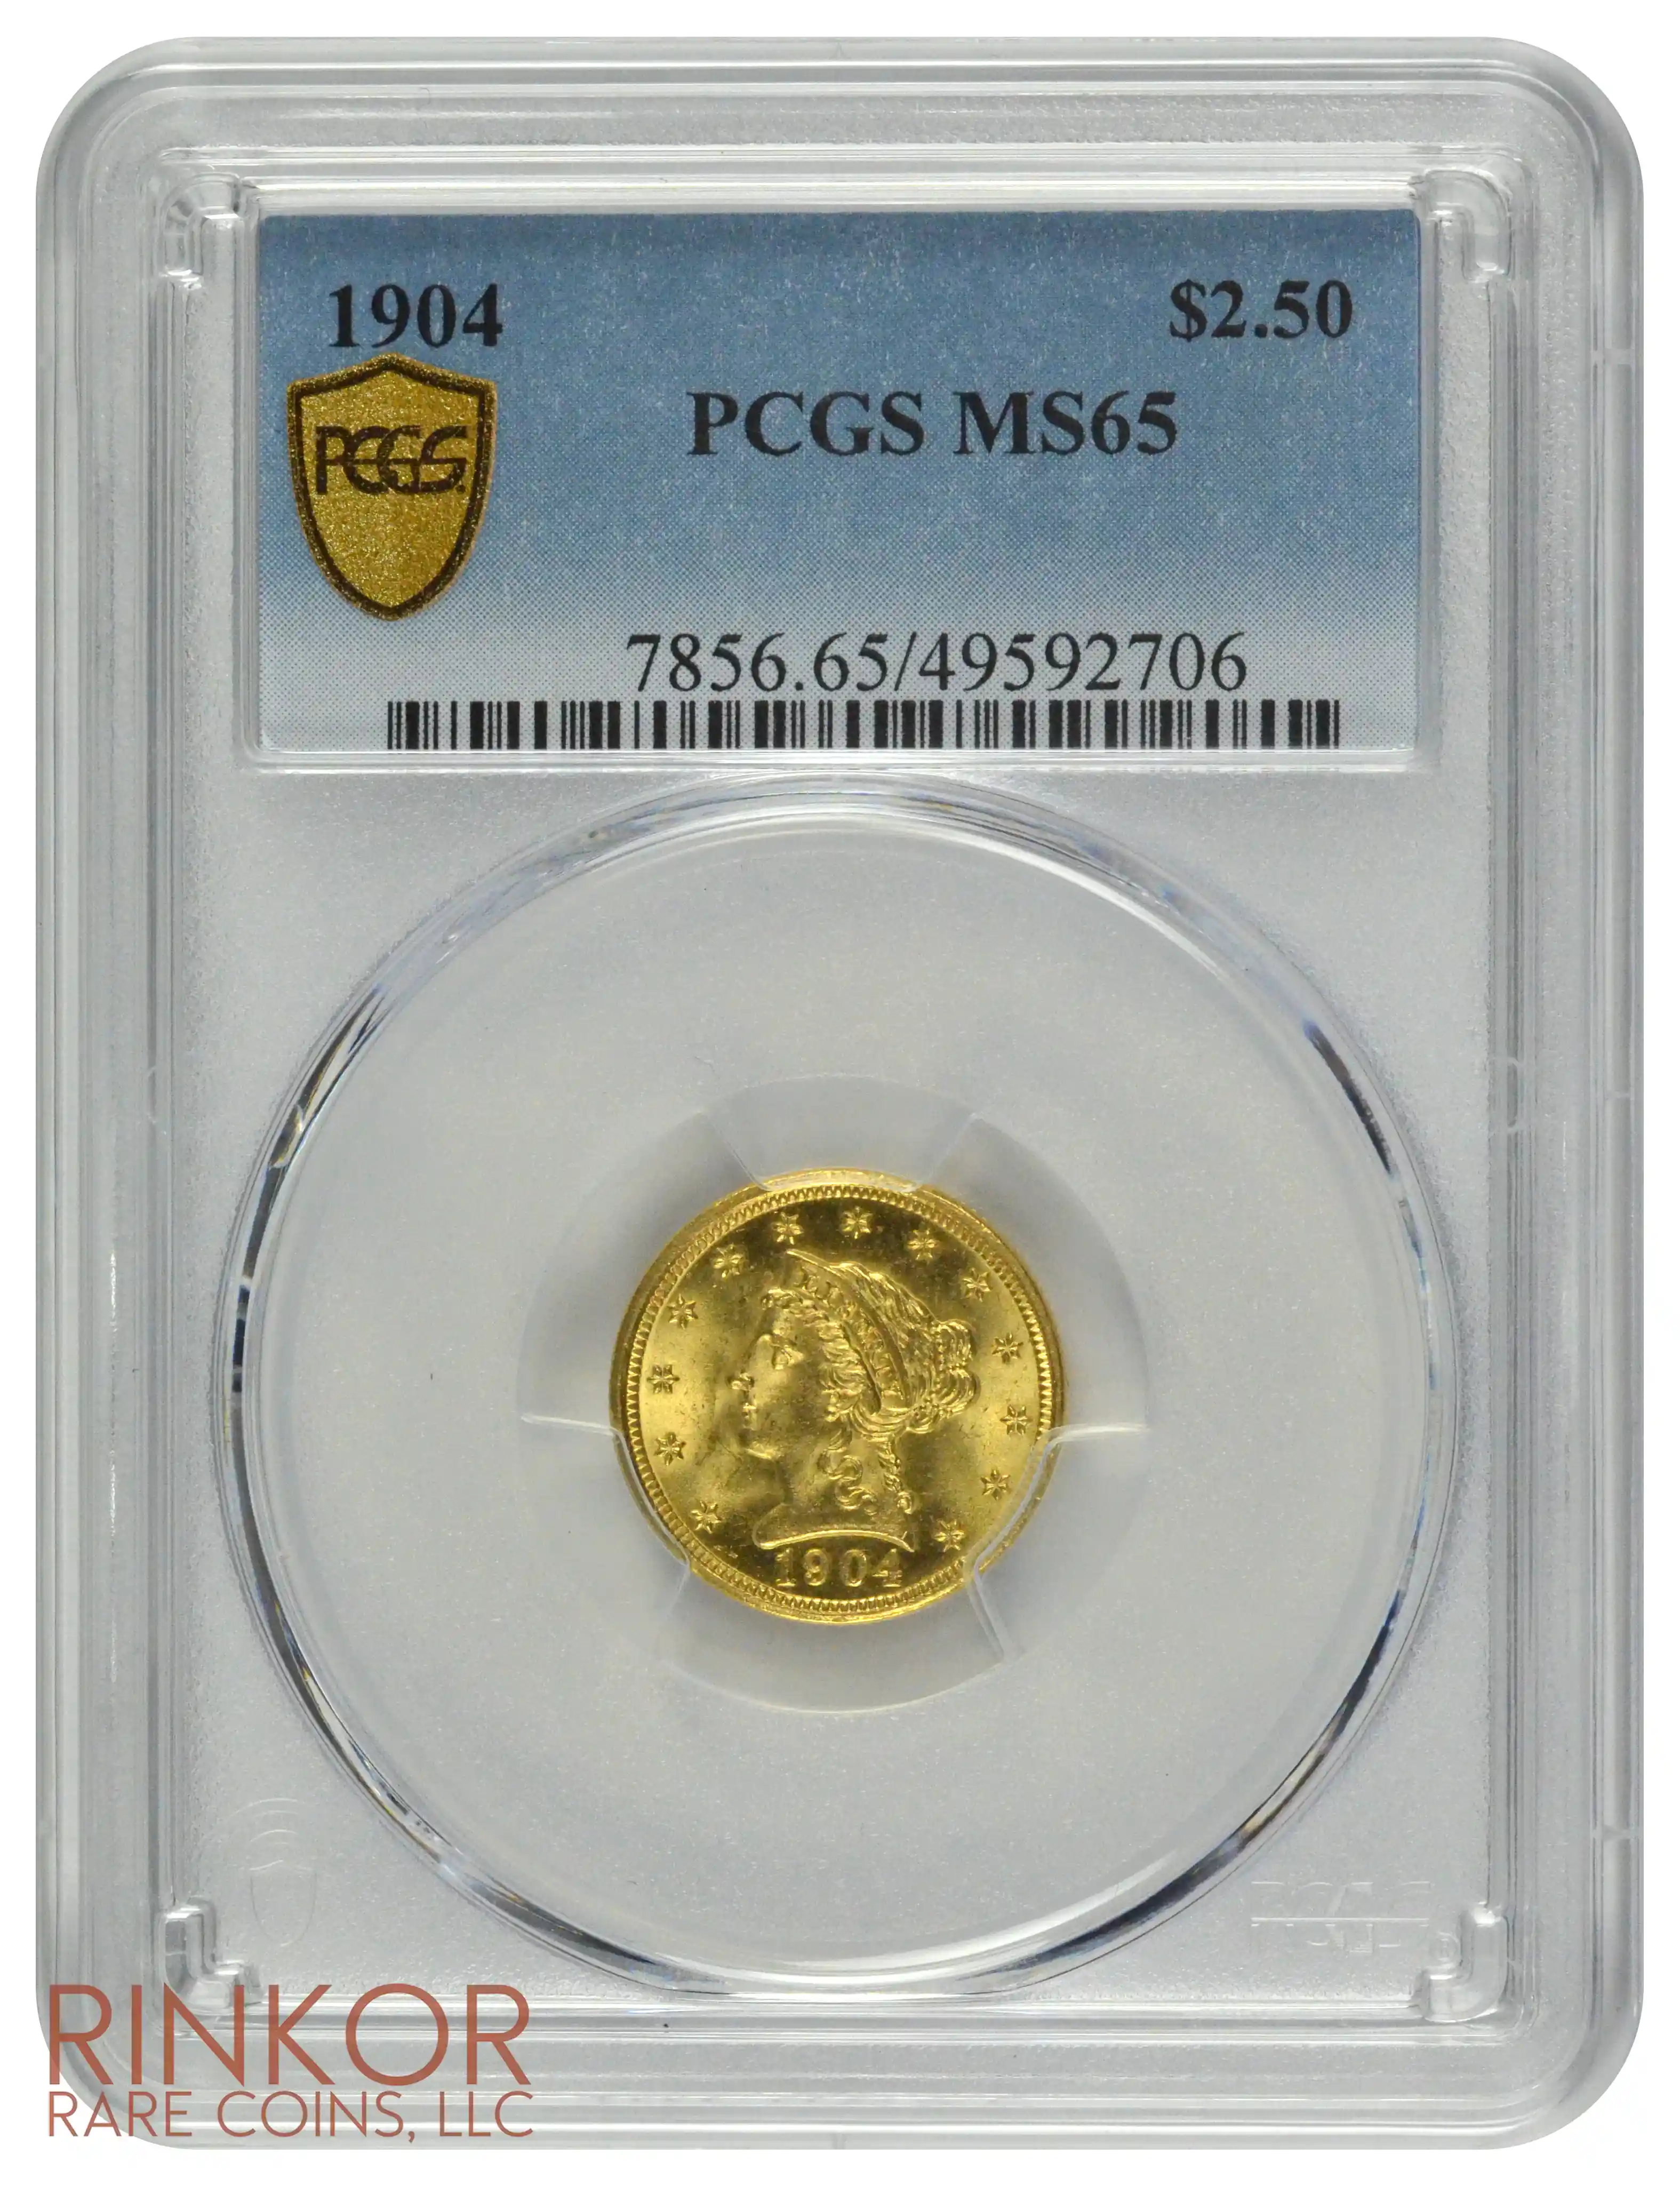 1904 Liberty Head $2.50 PCGS MS 65